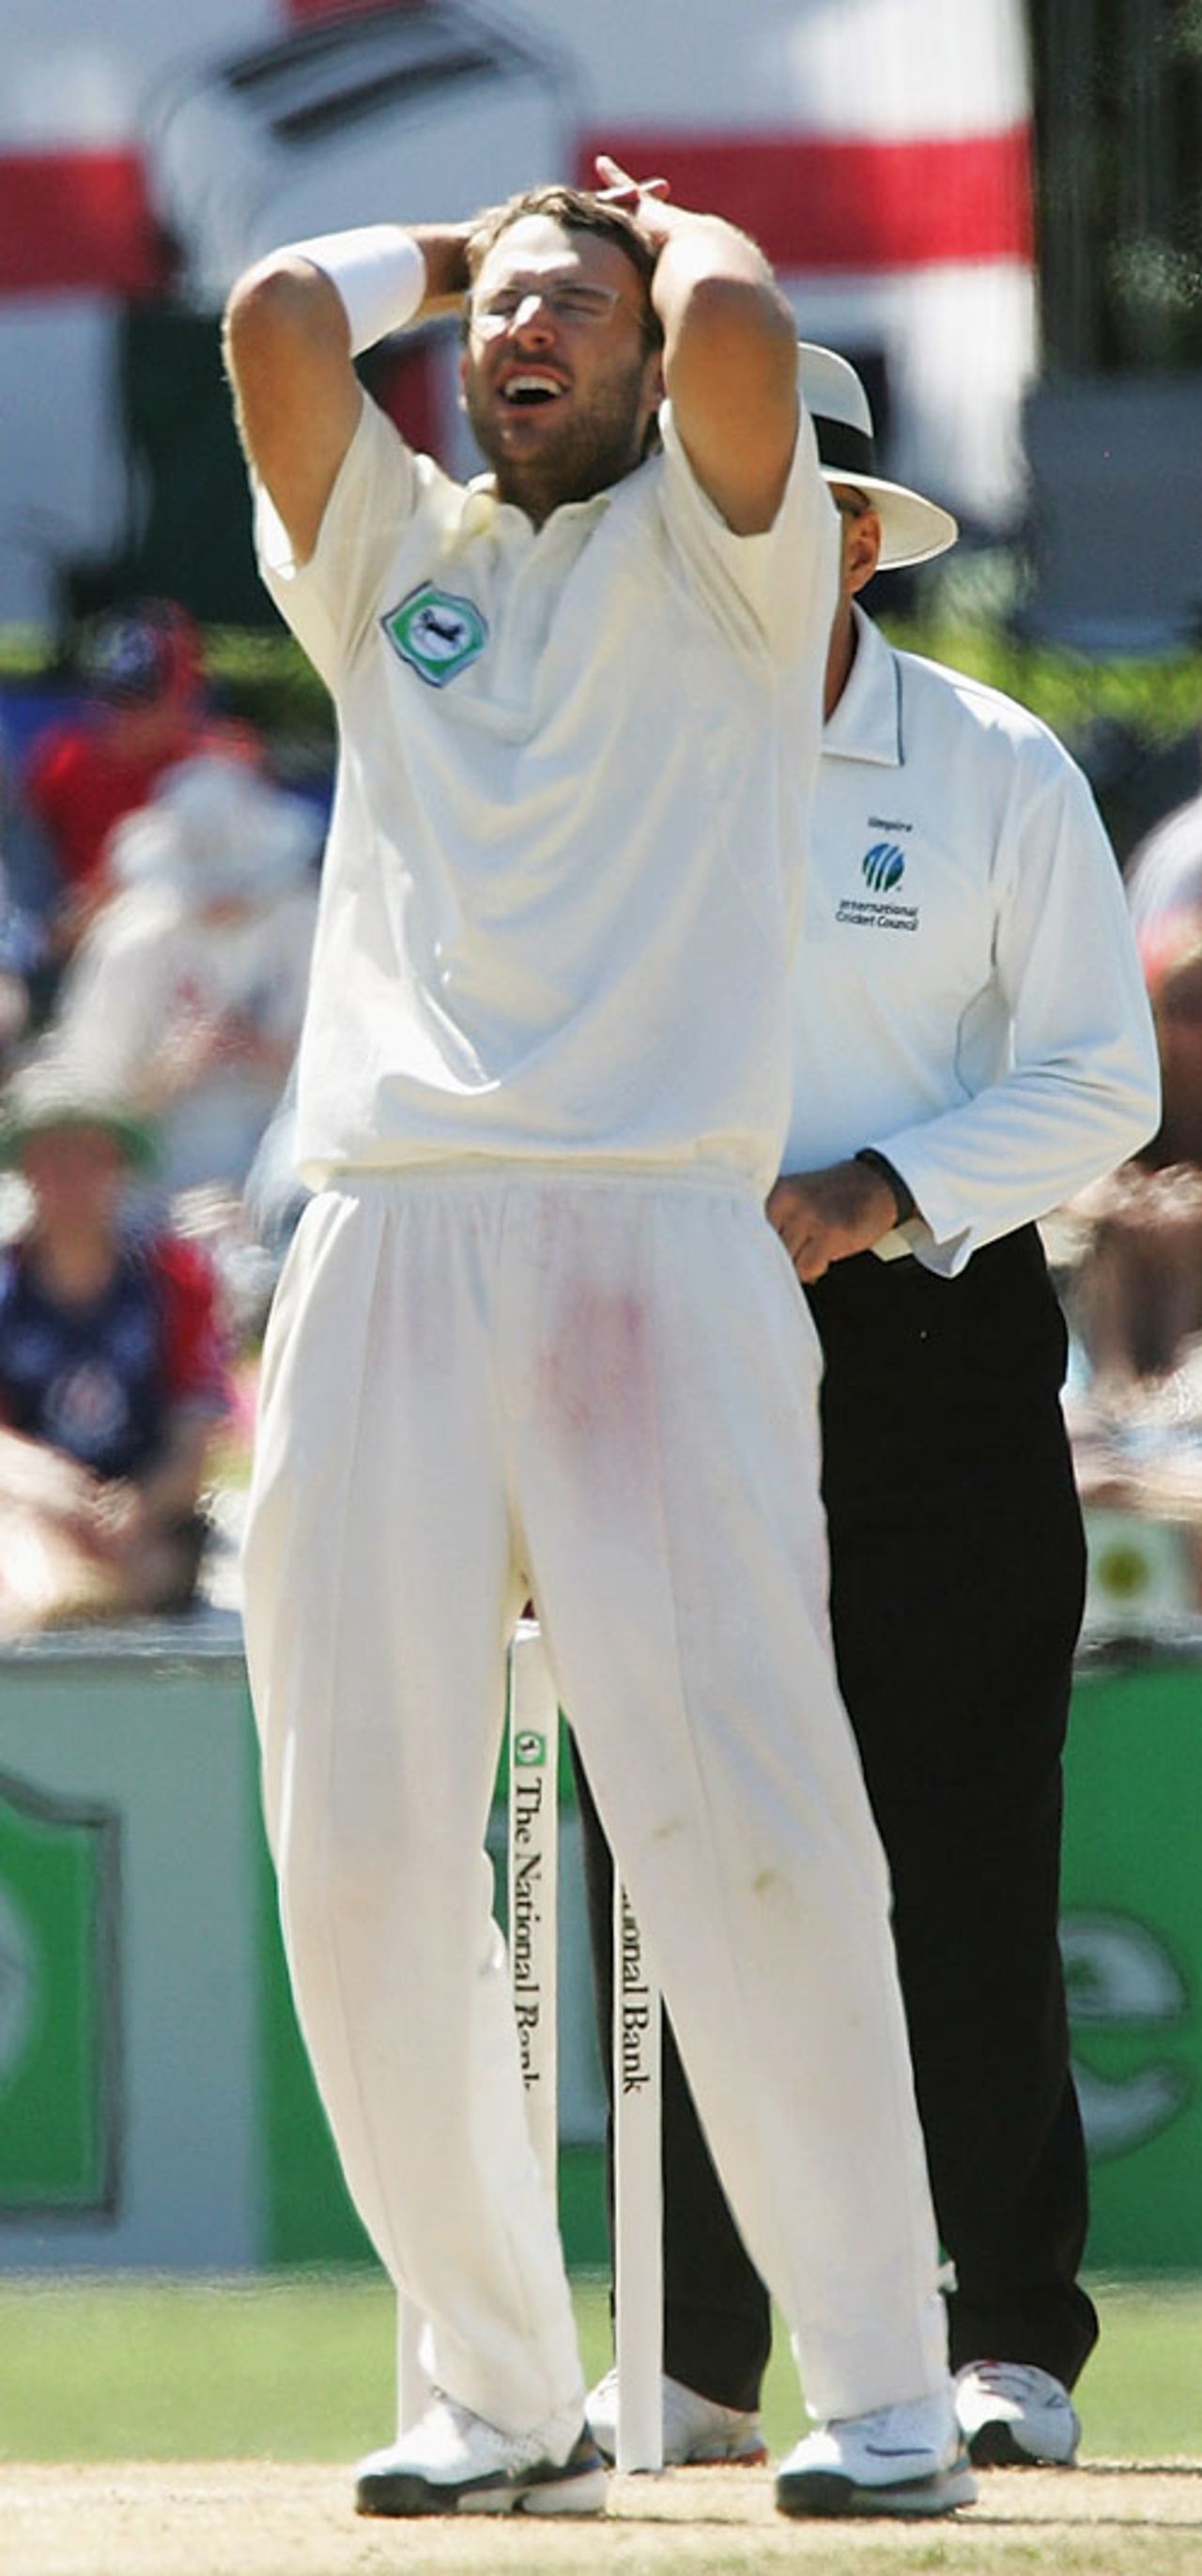 Daniel Vettori feels the strain as the runs pile up, New Zealand v England, 3rd Test, Napier, March 24, 2008